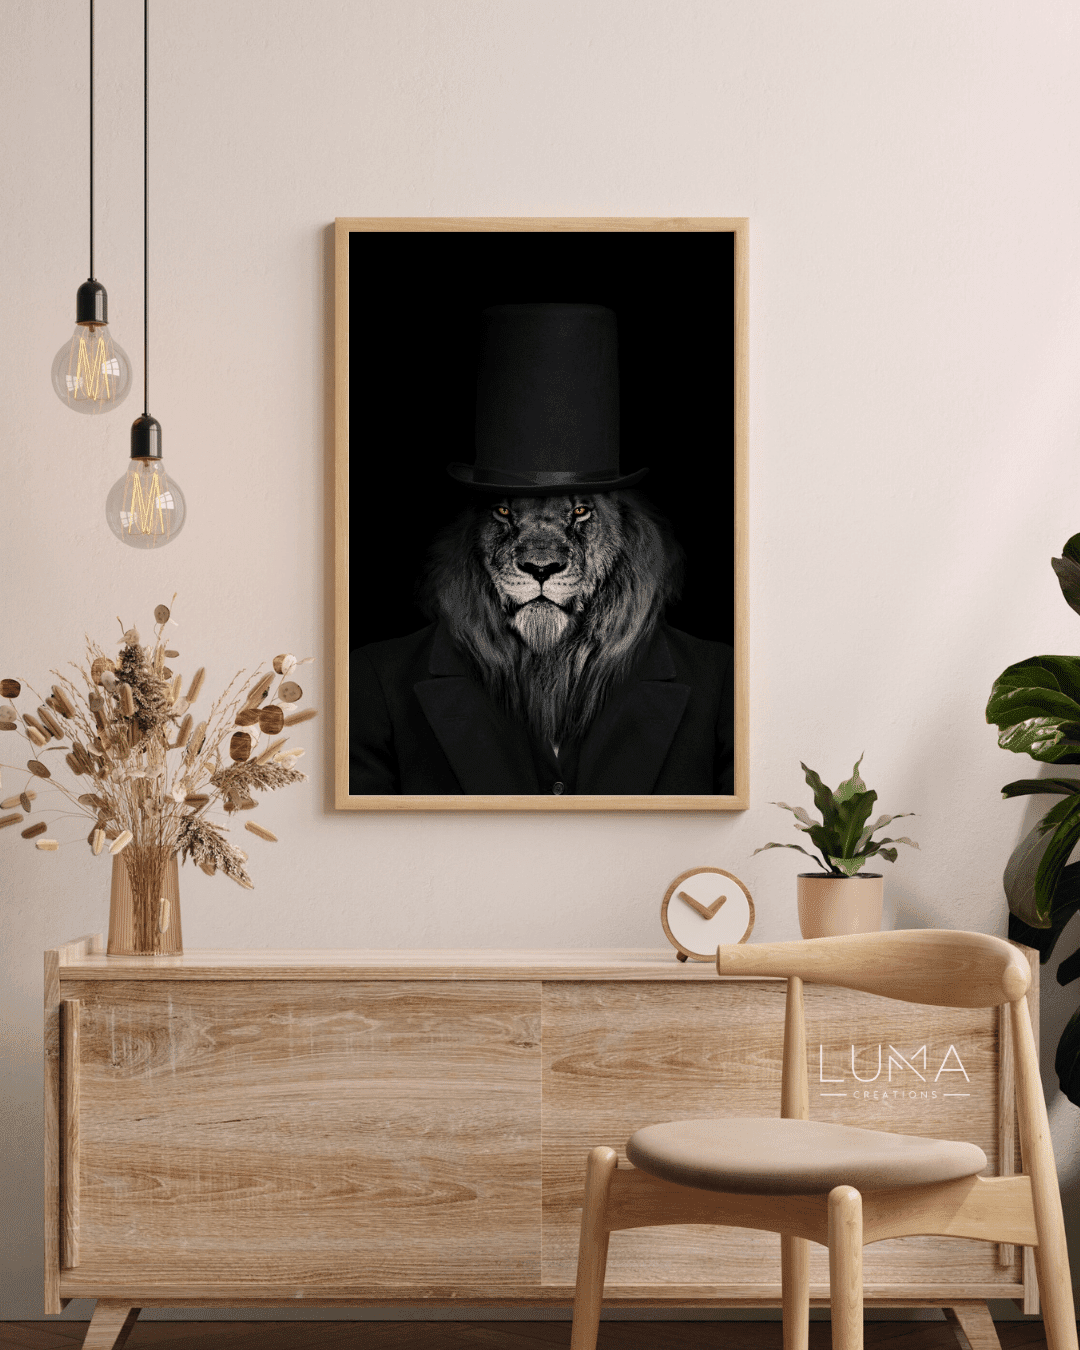 The Dark King Animal Artwork